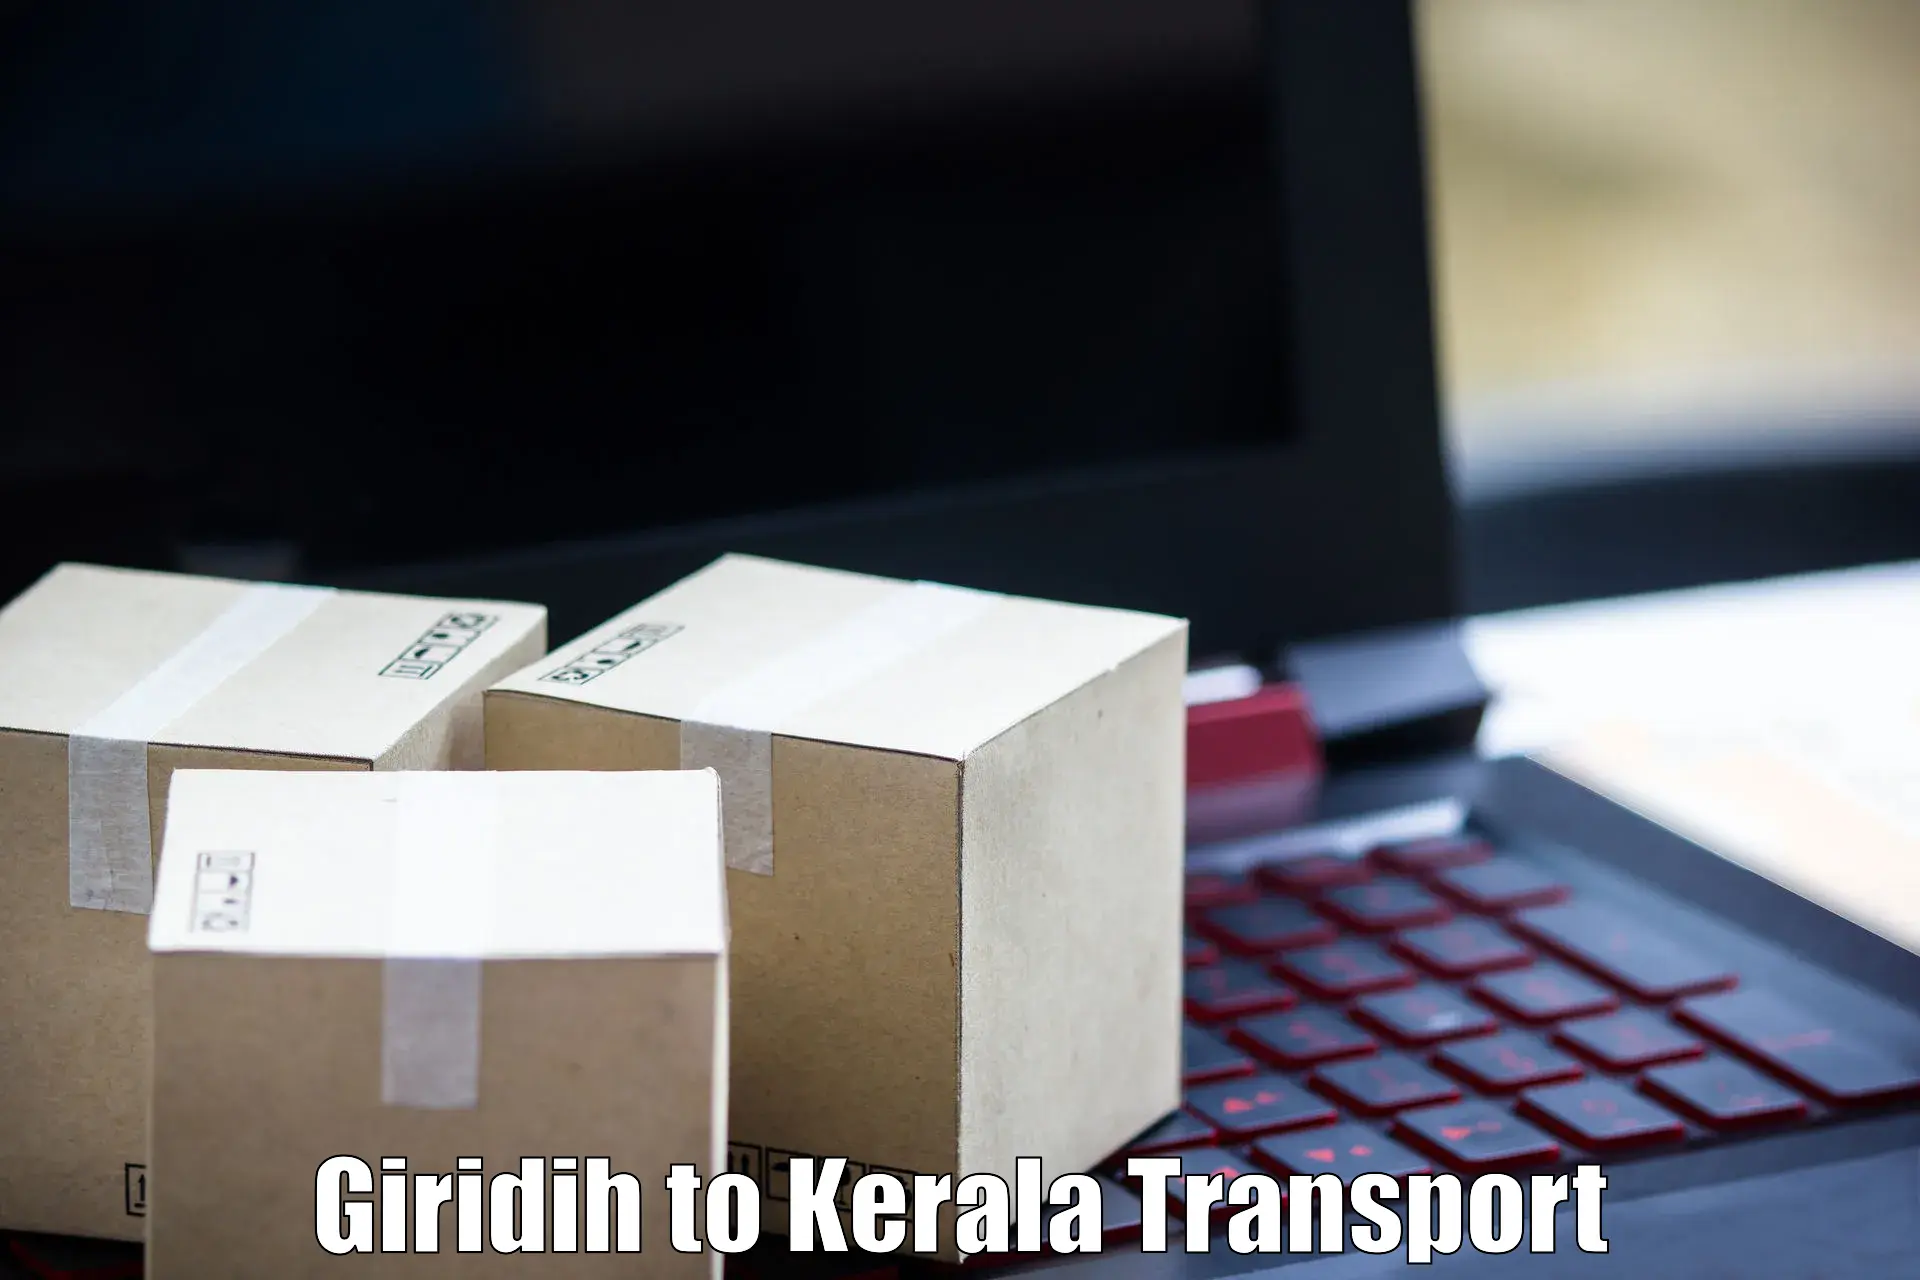 Delivery service Giridih to Mahe